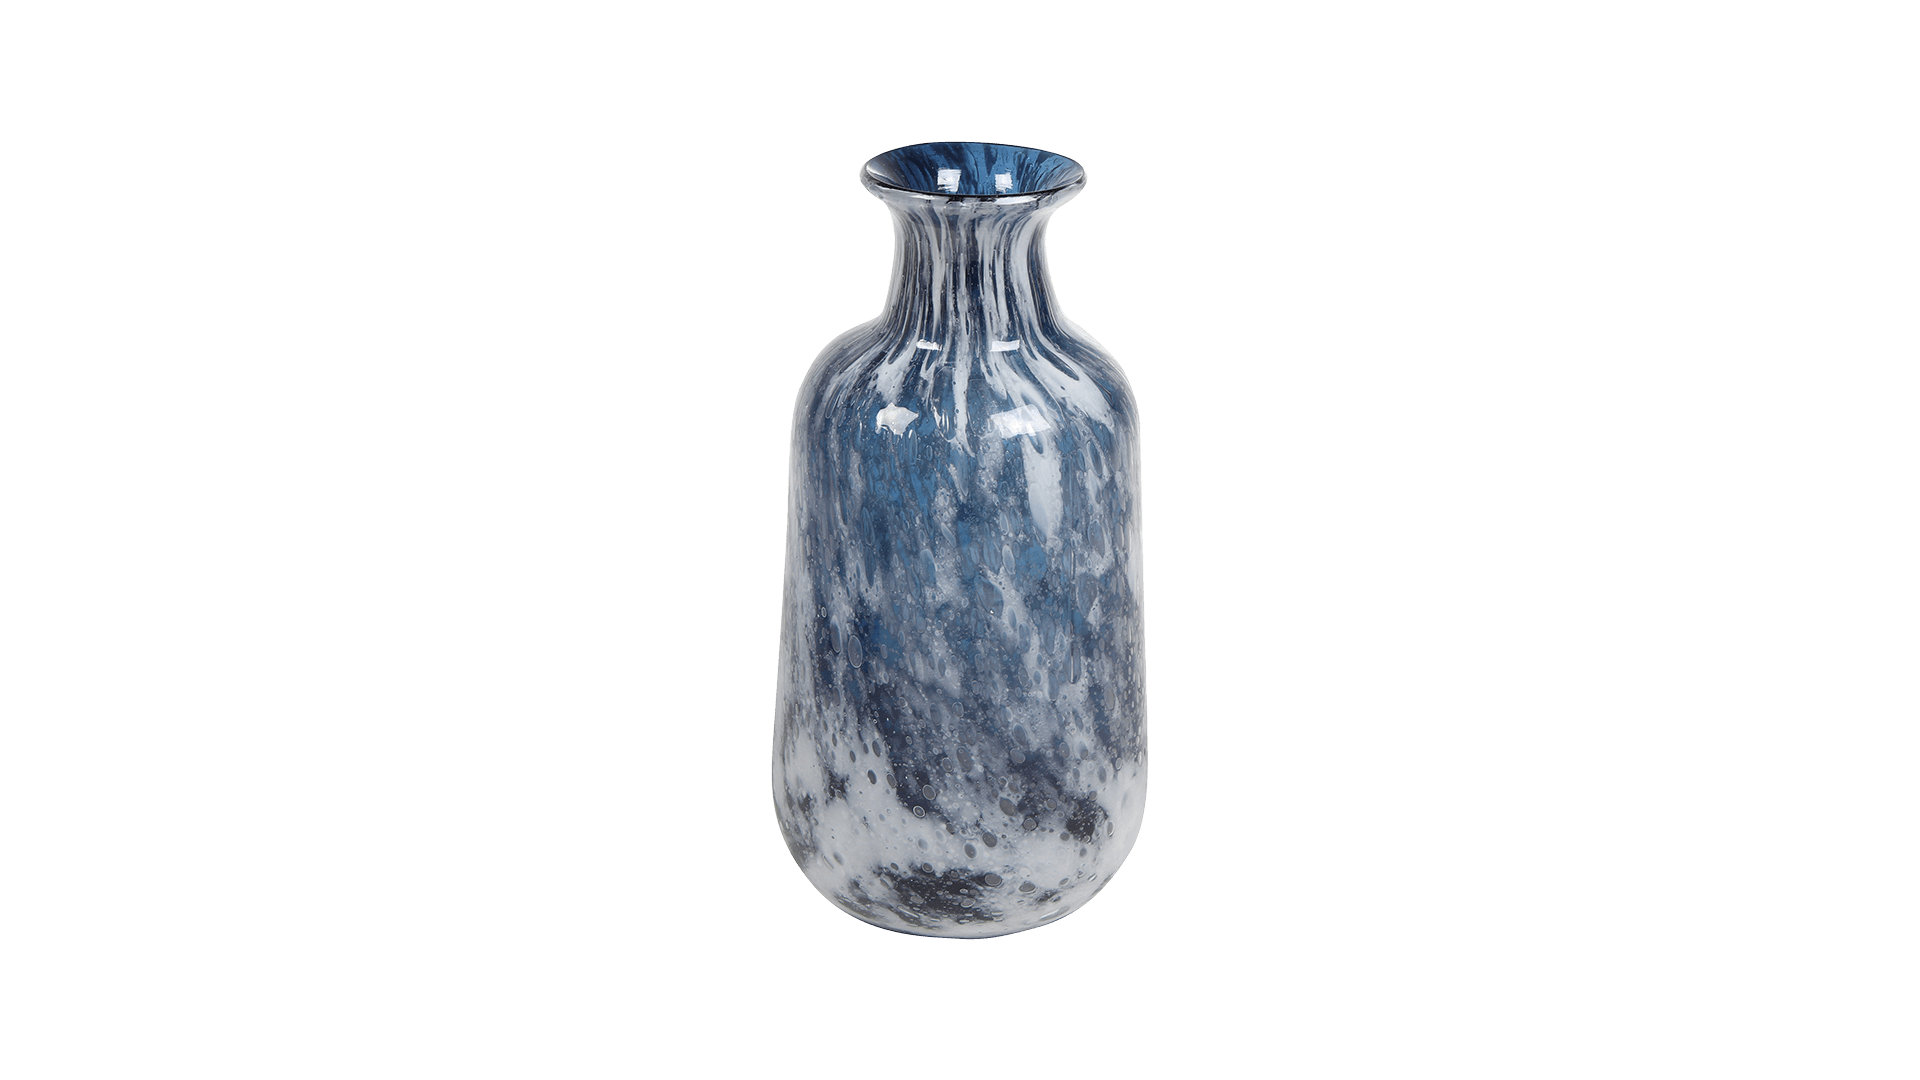 Petit vase très tendance bleu